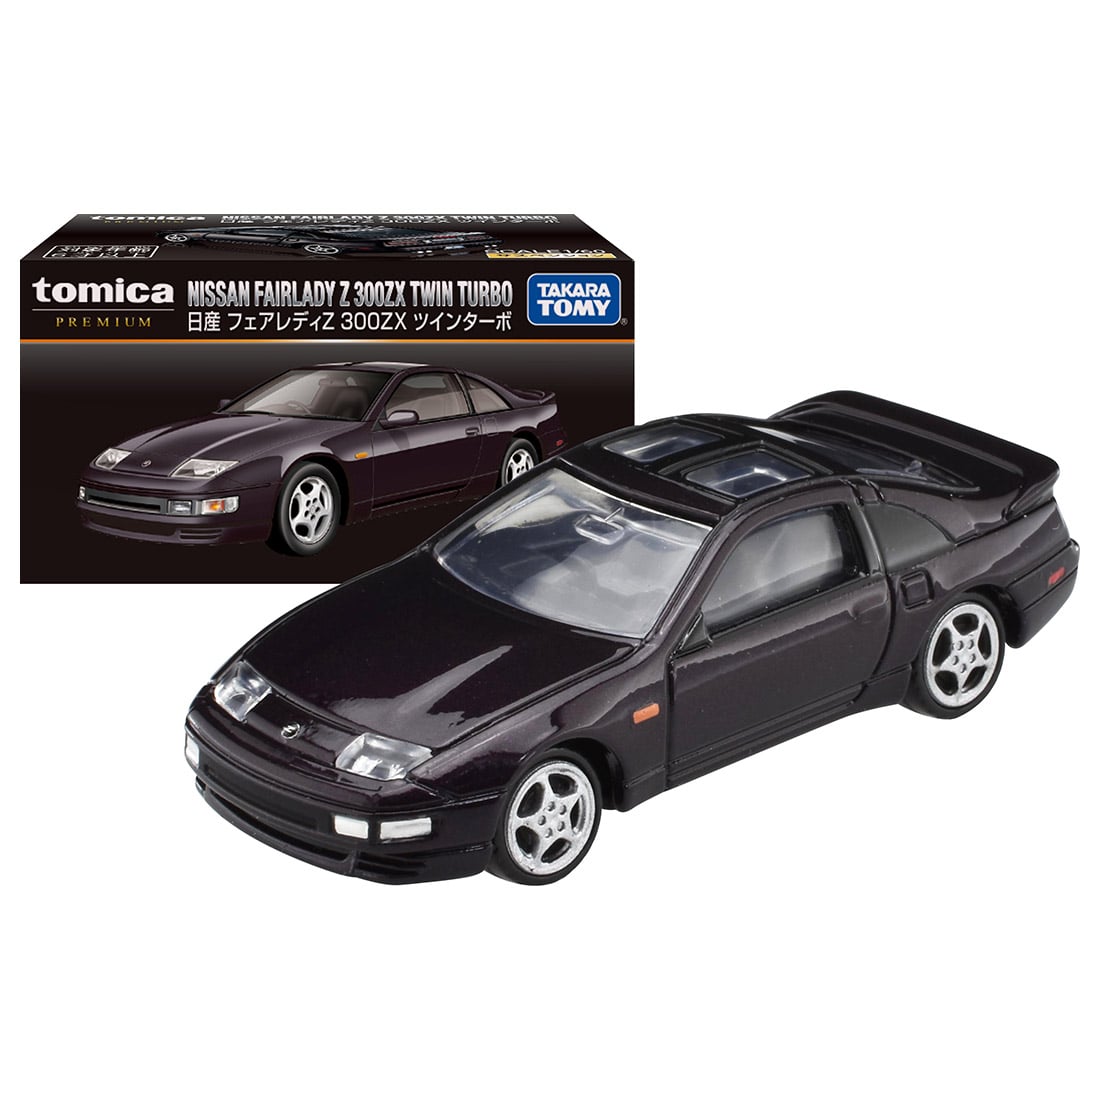 Tomica Premium 限定合金車Nissan Fairlady Z 300ZX Twin Turbo